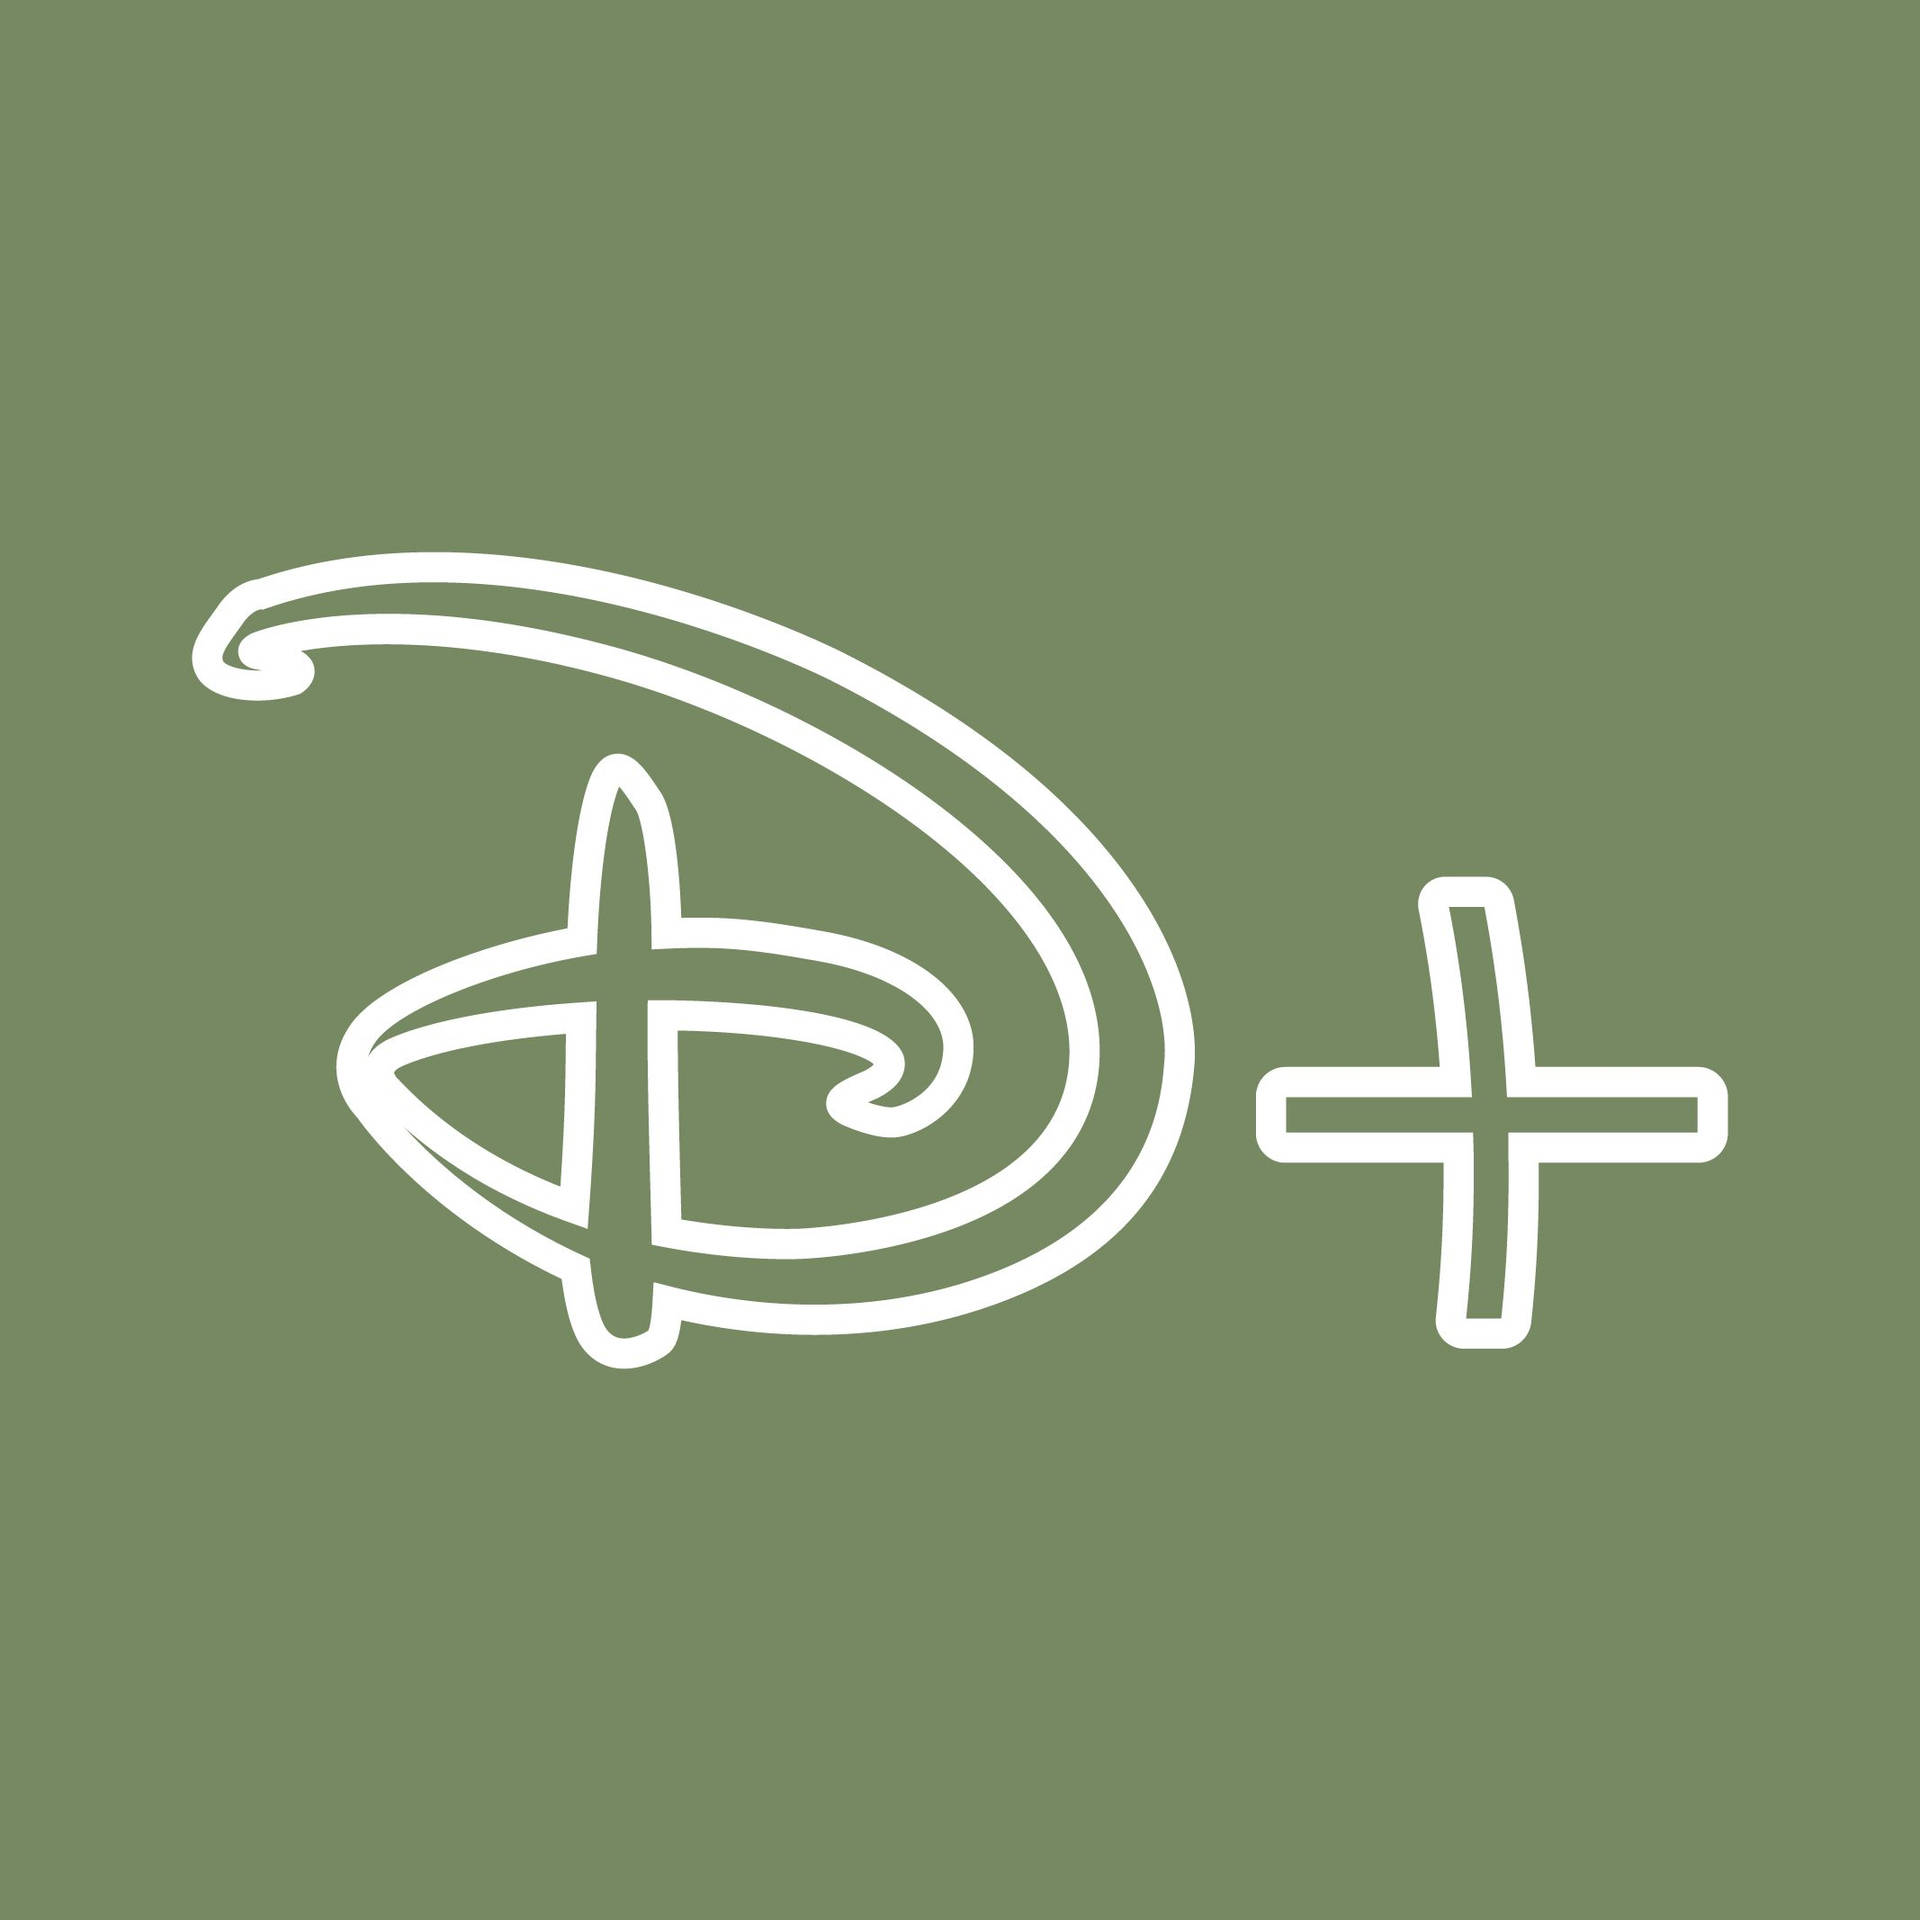 Download Disney Plus Pastel Green Logo Wallpaper